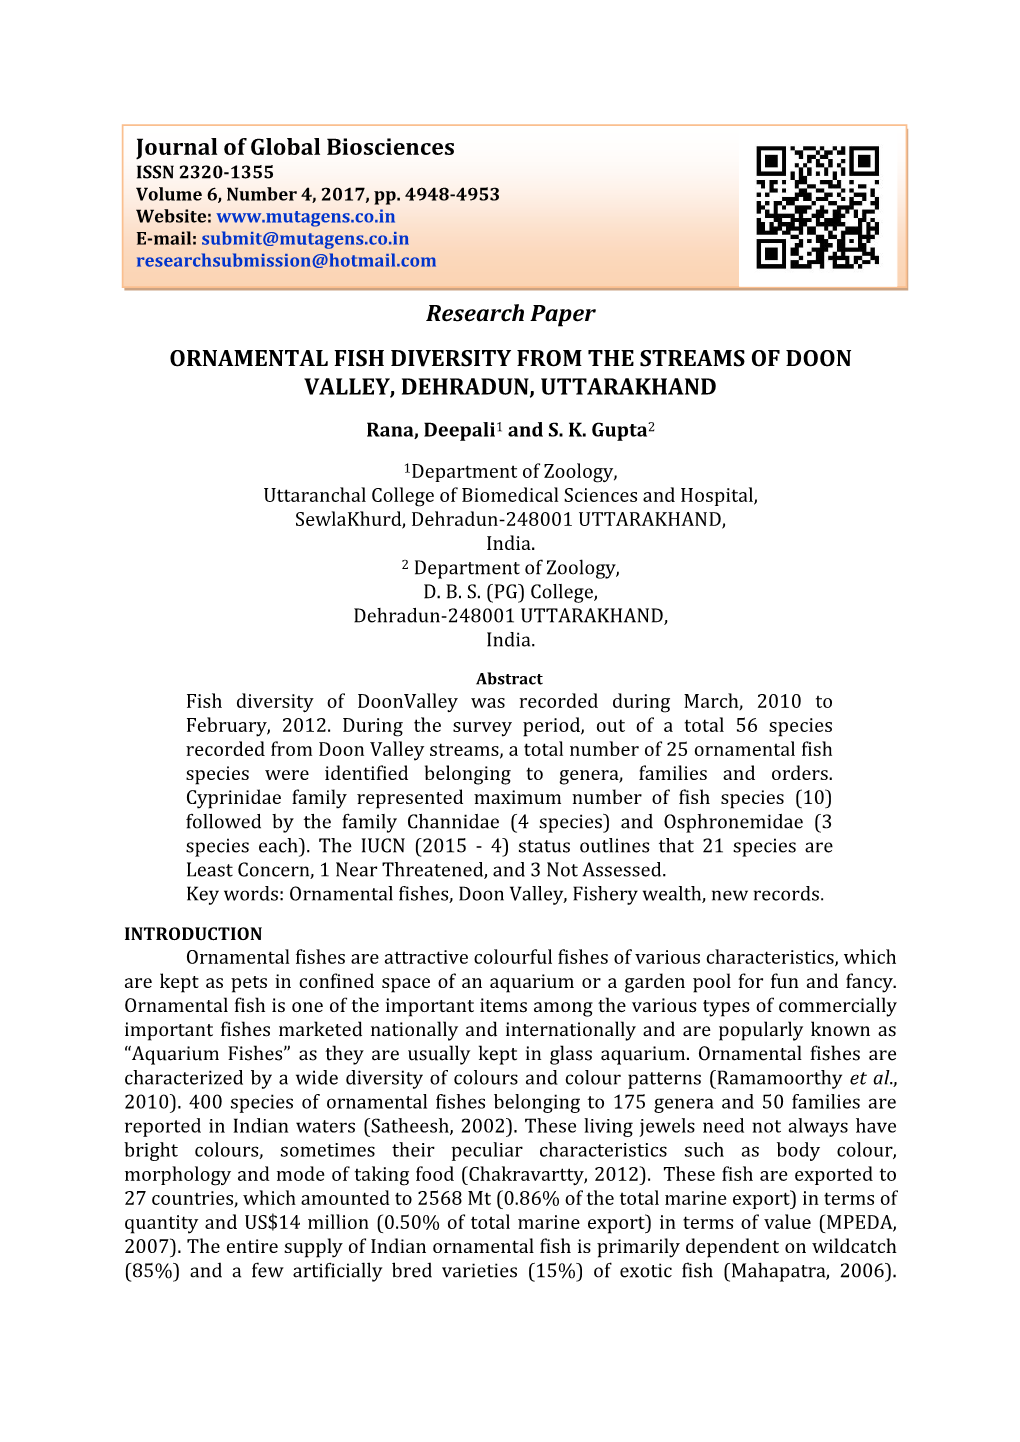 Research Paper ORNAMENTAL FISH DIVERSITY from the STREAMS of DOON VALLEY, DEHRADUN, UTTARAKHAND